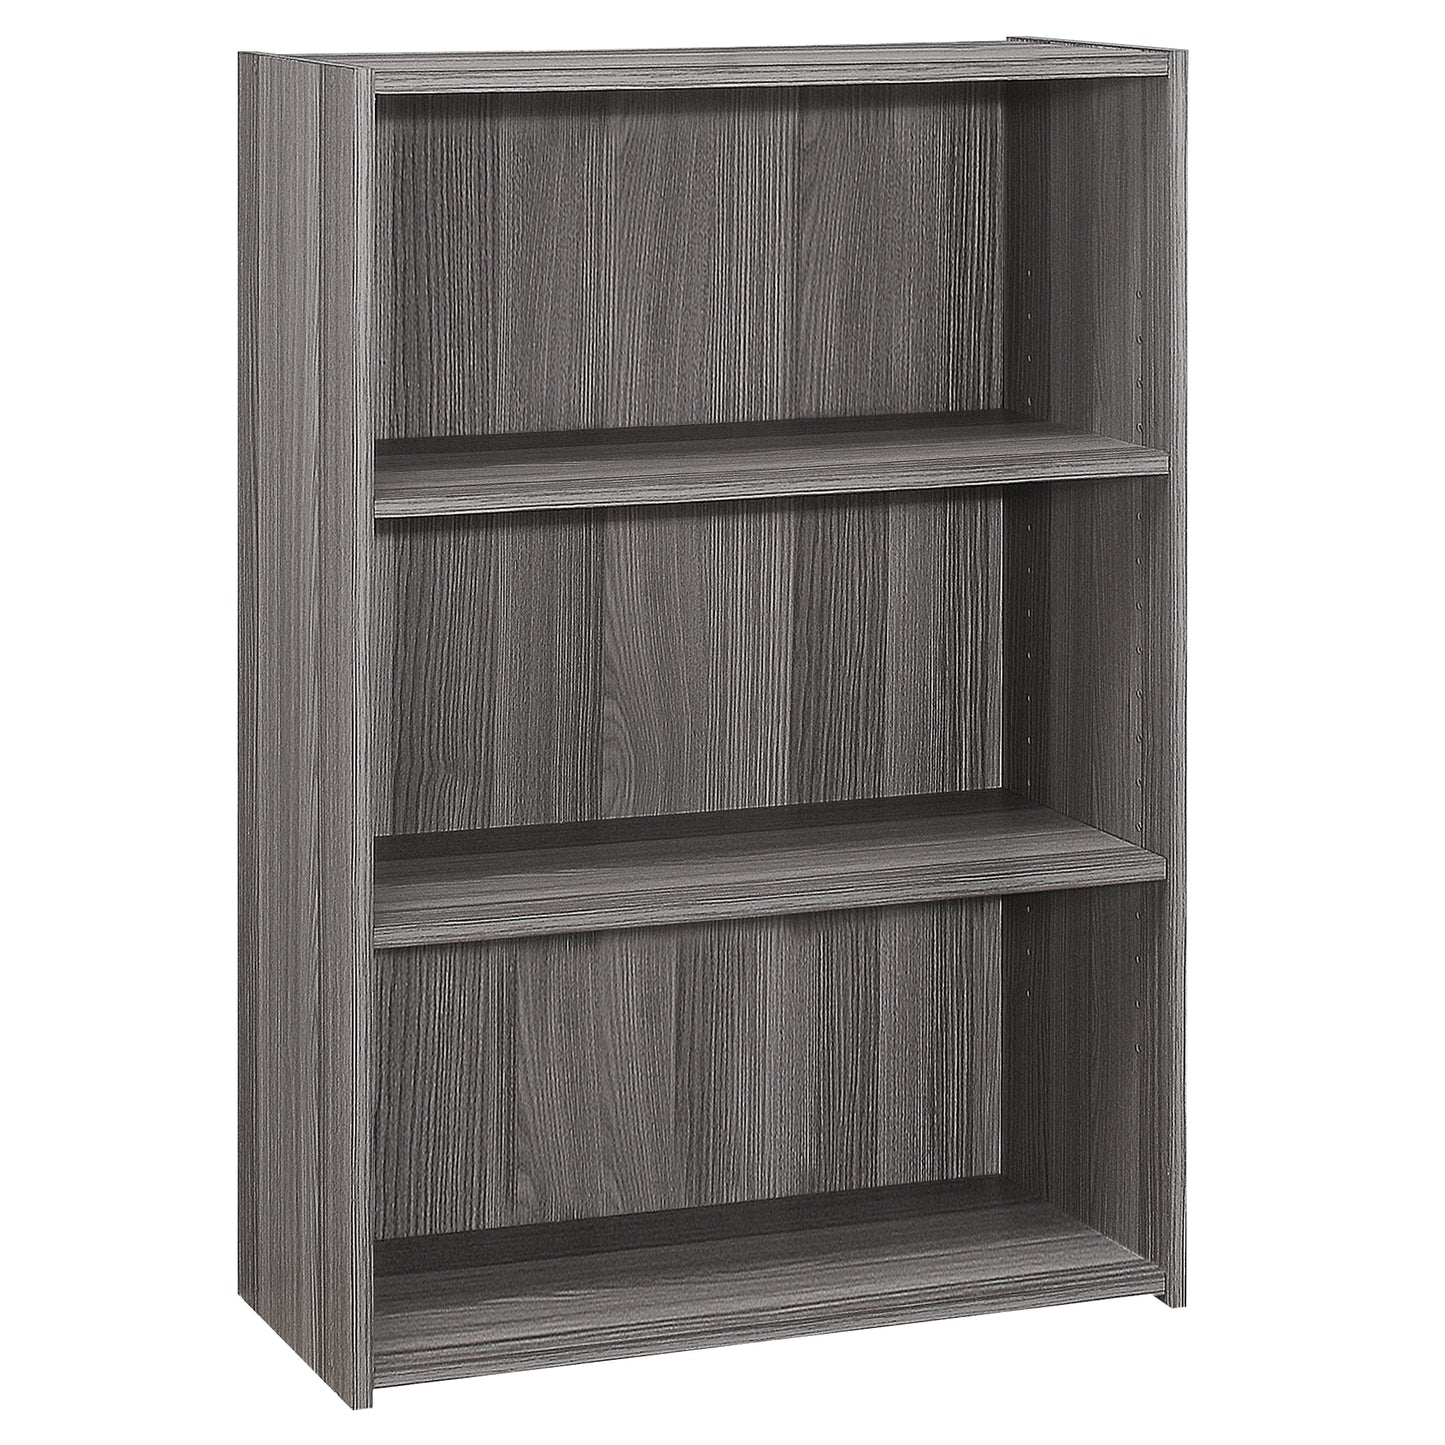 Transitional 36"H 3 Shelf Bookcase in Grey Finish